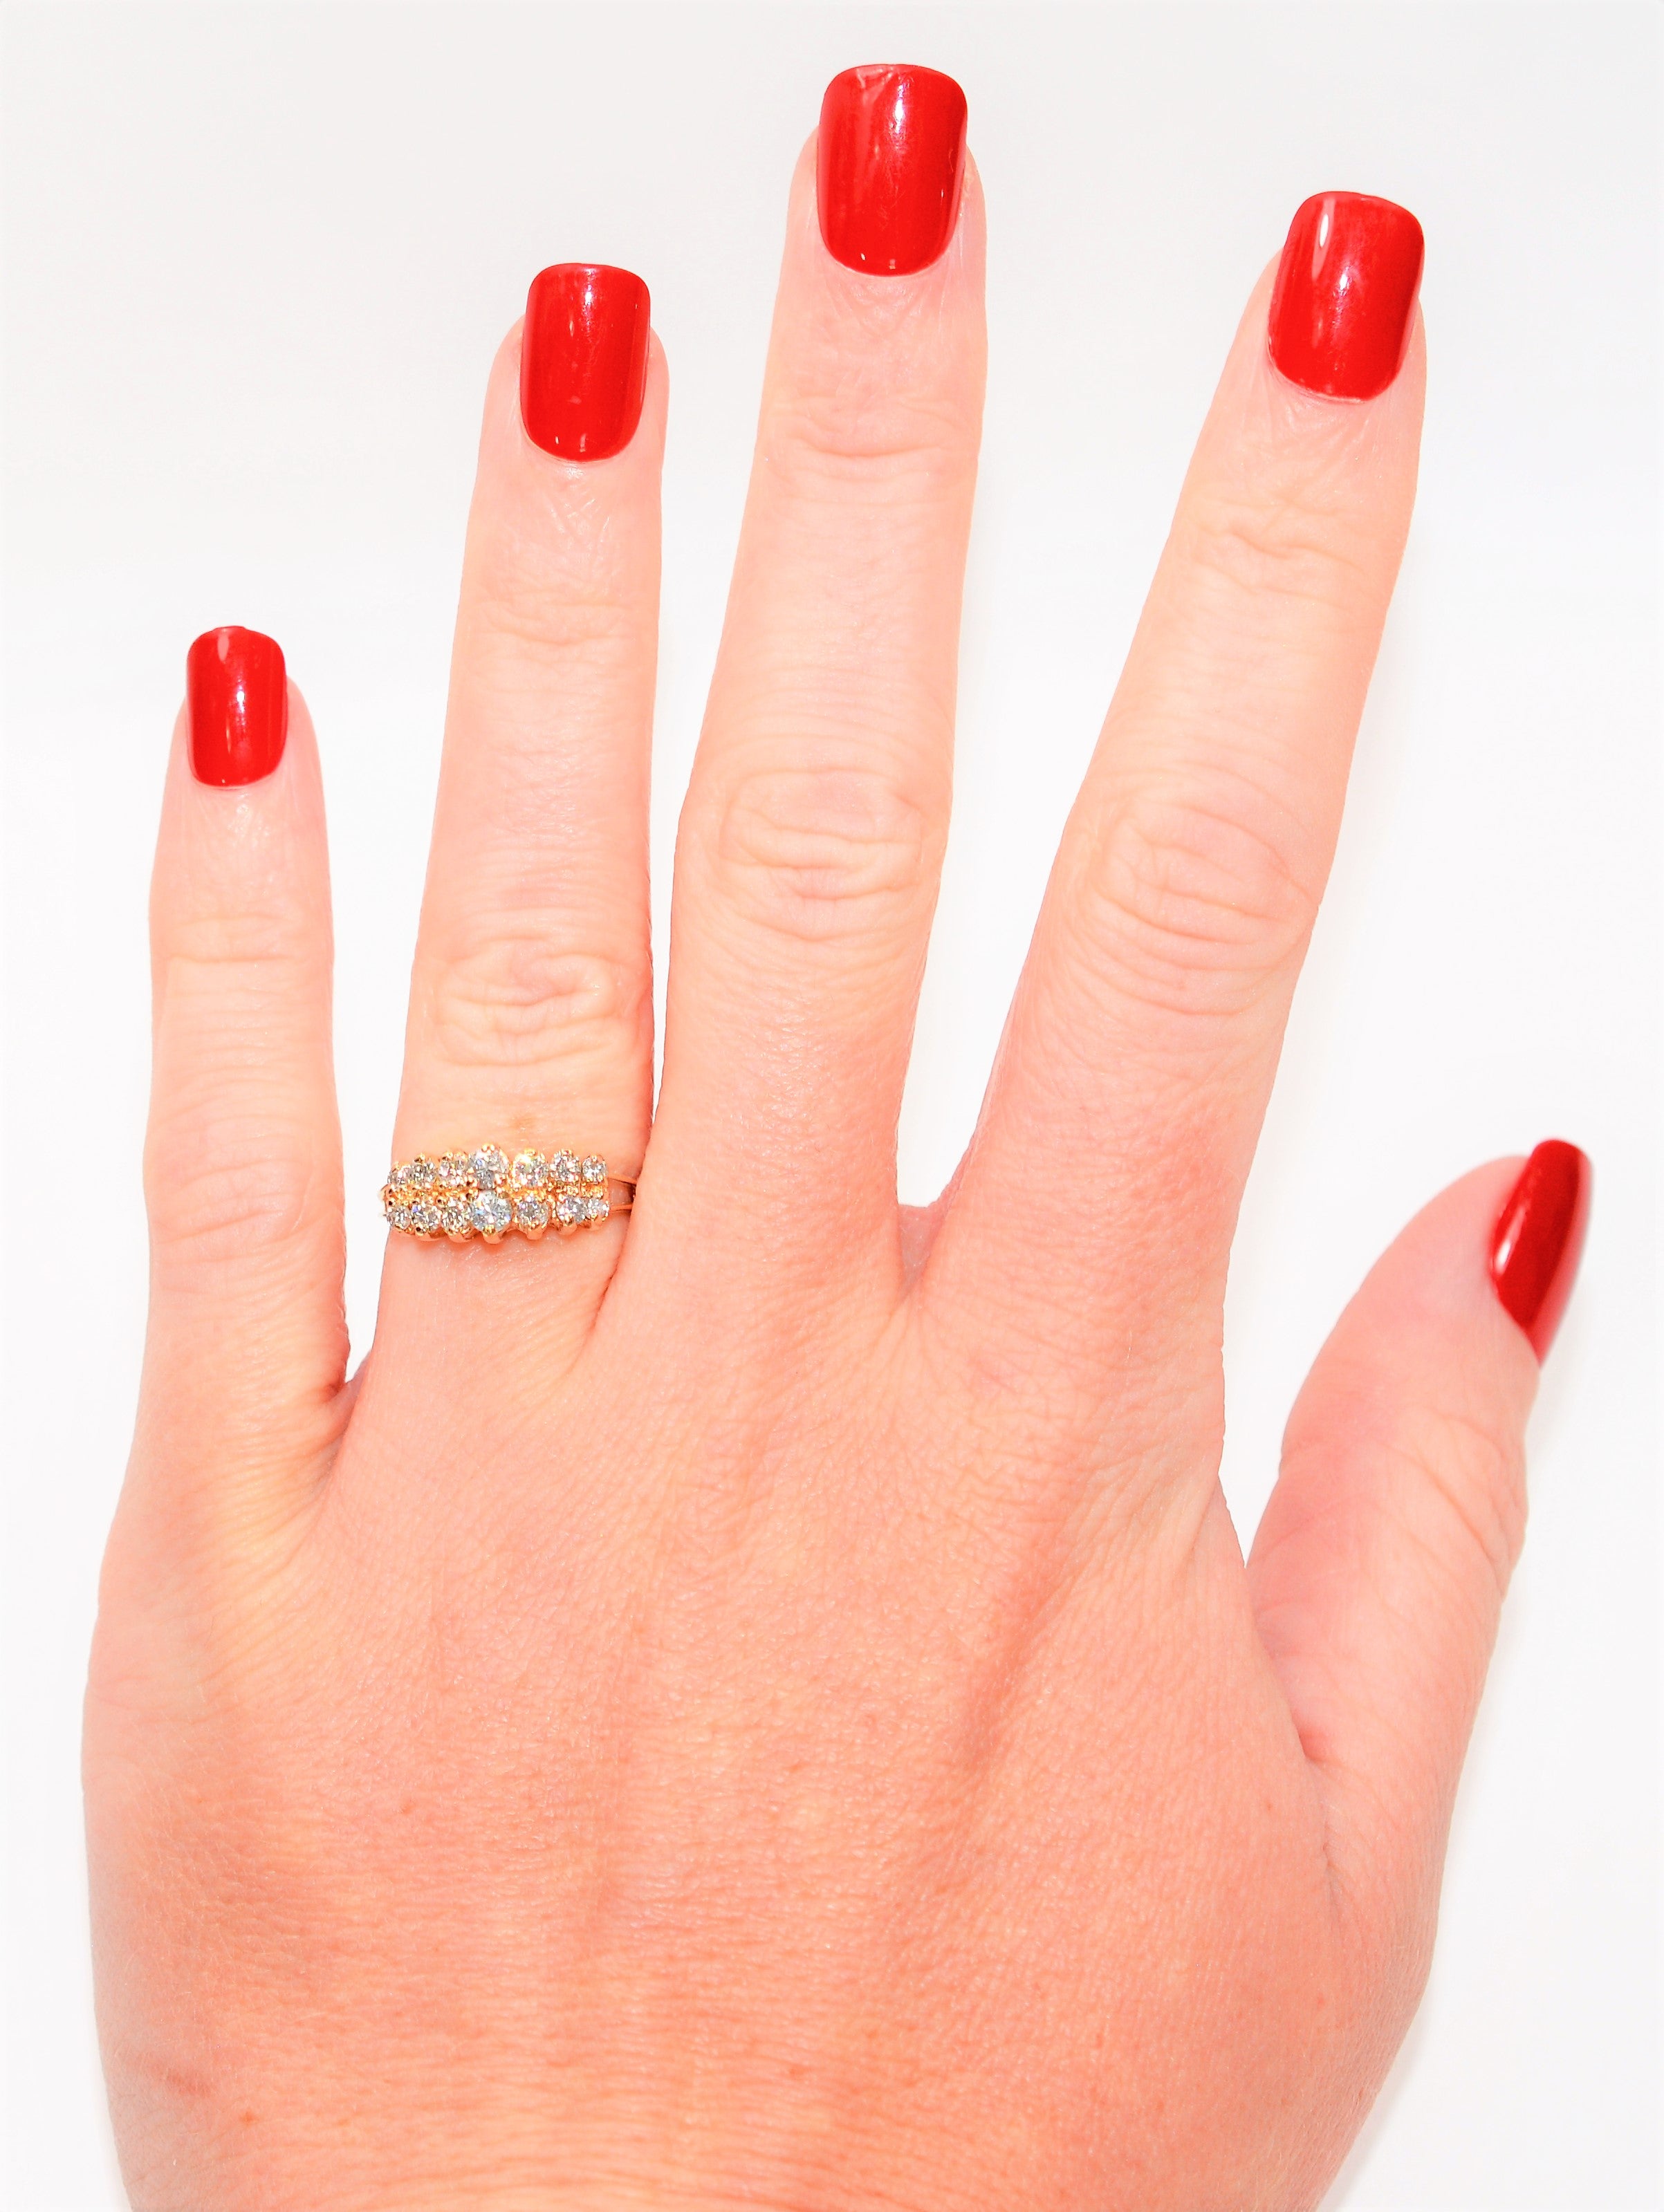 Natural Diamond Ring 14K Solid Gold .58tcw Cluster Ring Cocktail Ring Vintage Ring Estate Ring Statement Ring Ladies Ring Women's Ring Fine